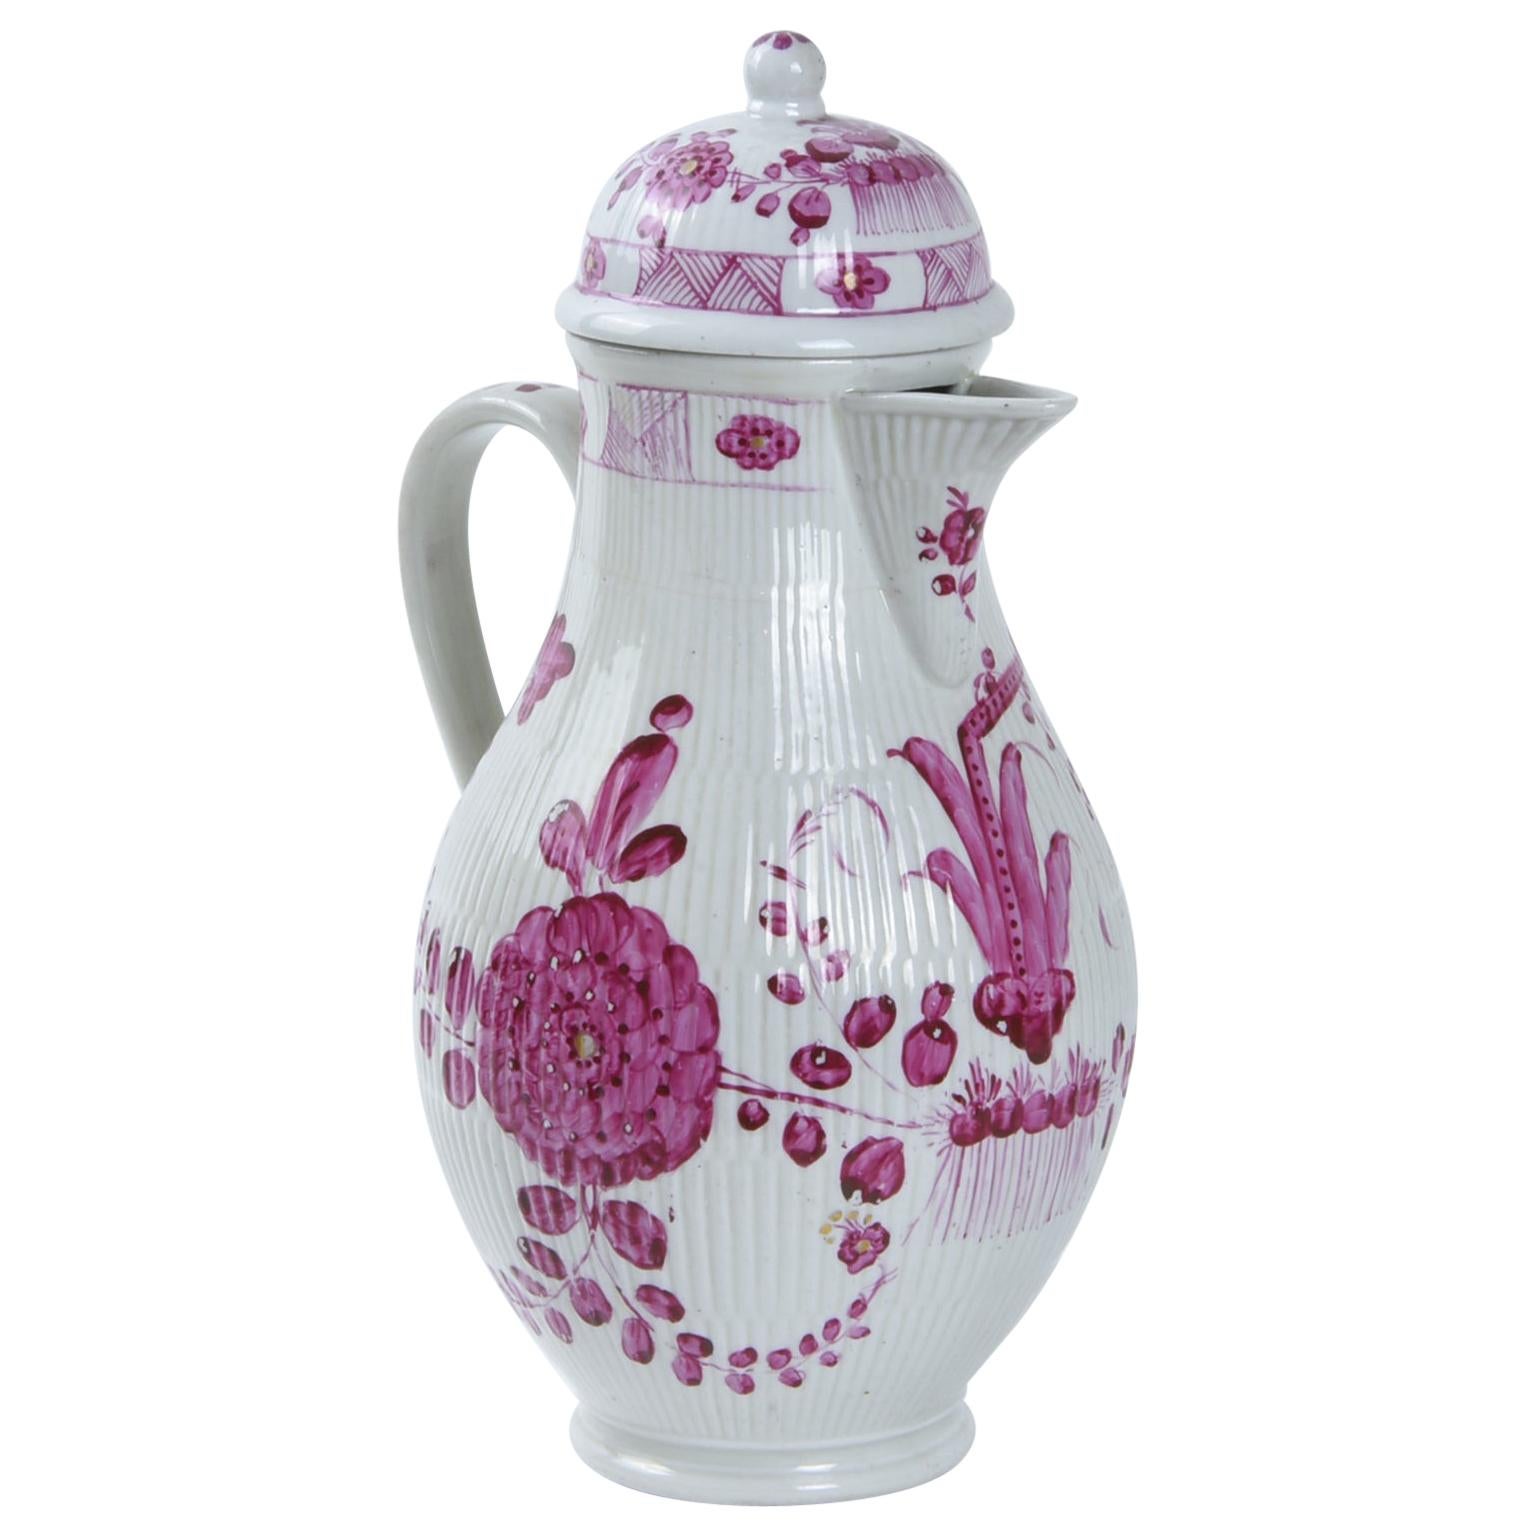 Early 19th Century Tetau Porcelain Teapot For Sale